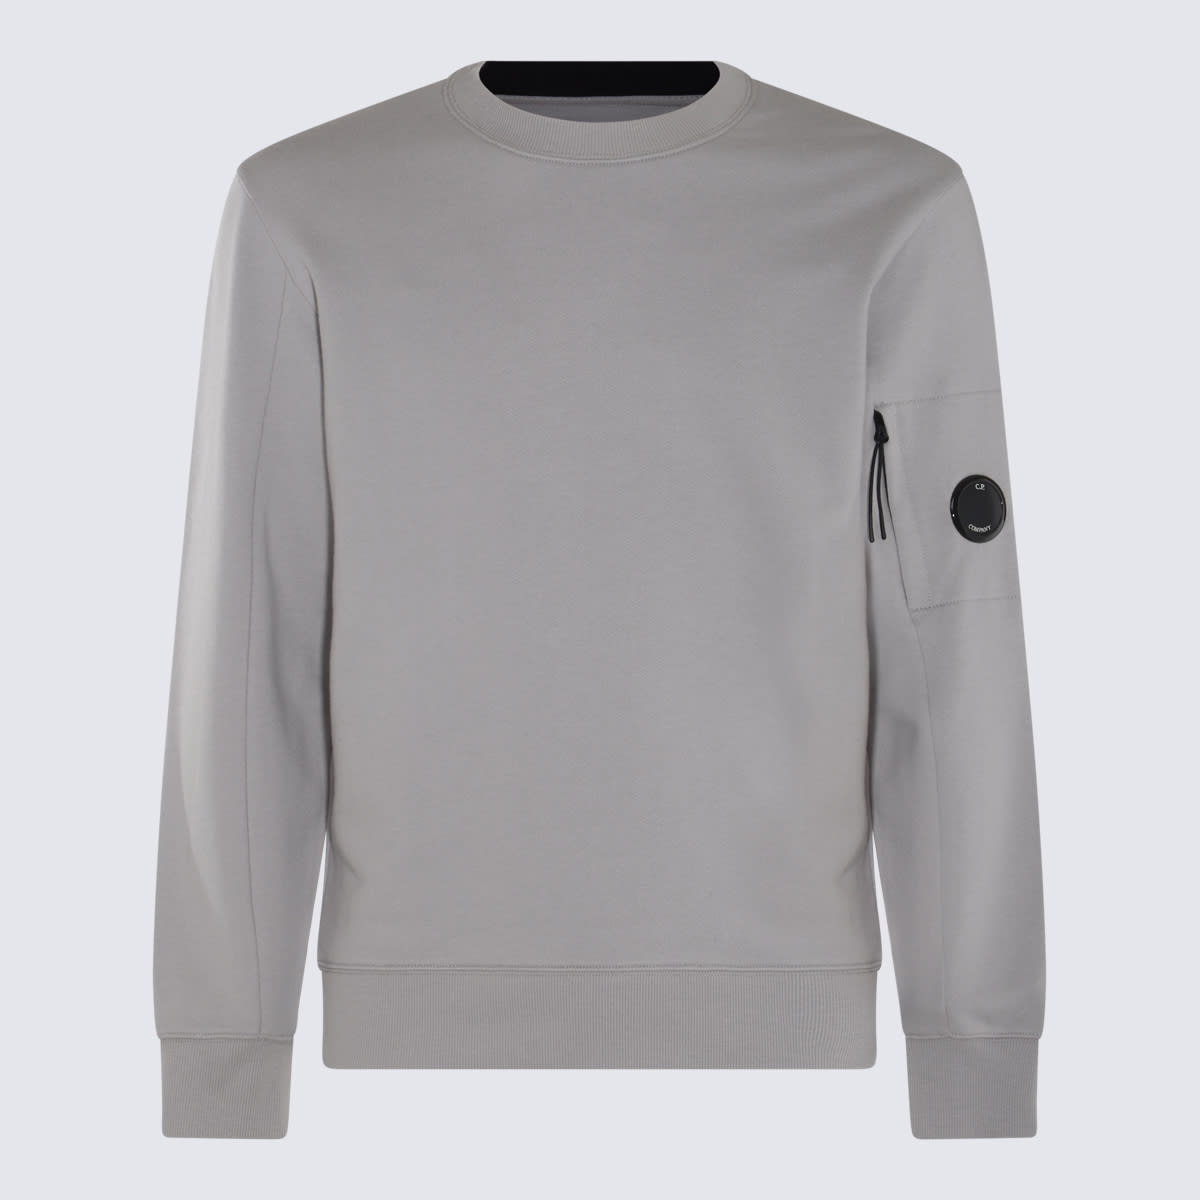 Grey Cotton Sweatshirt